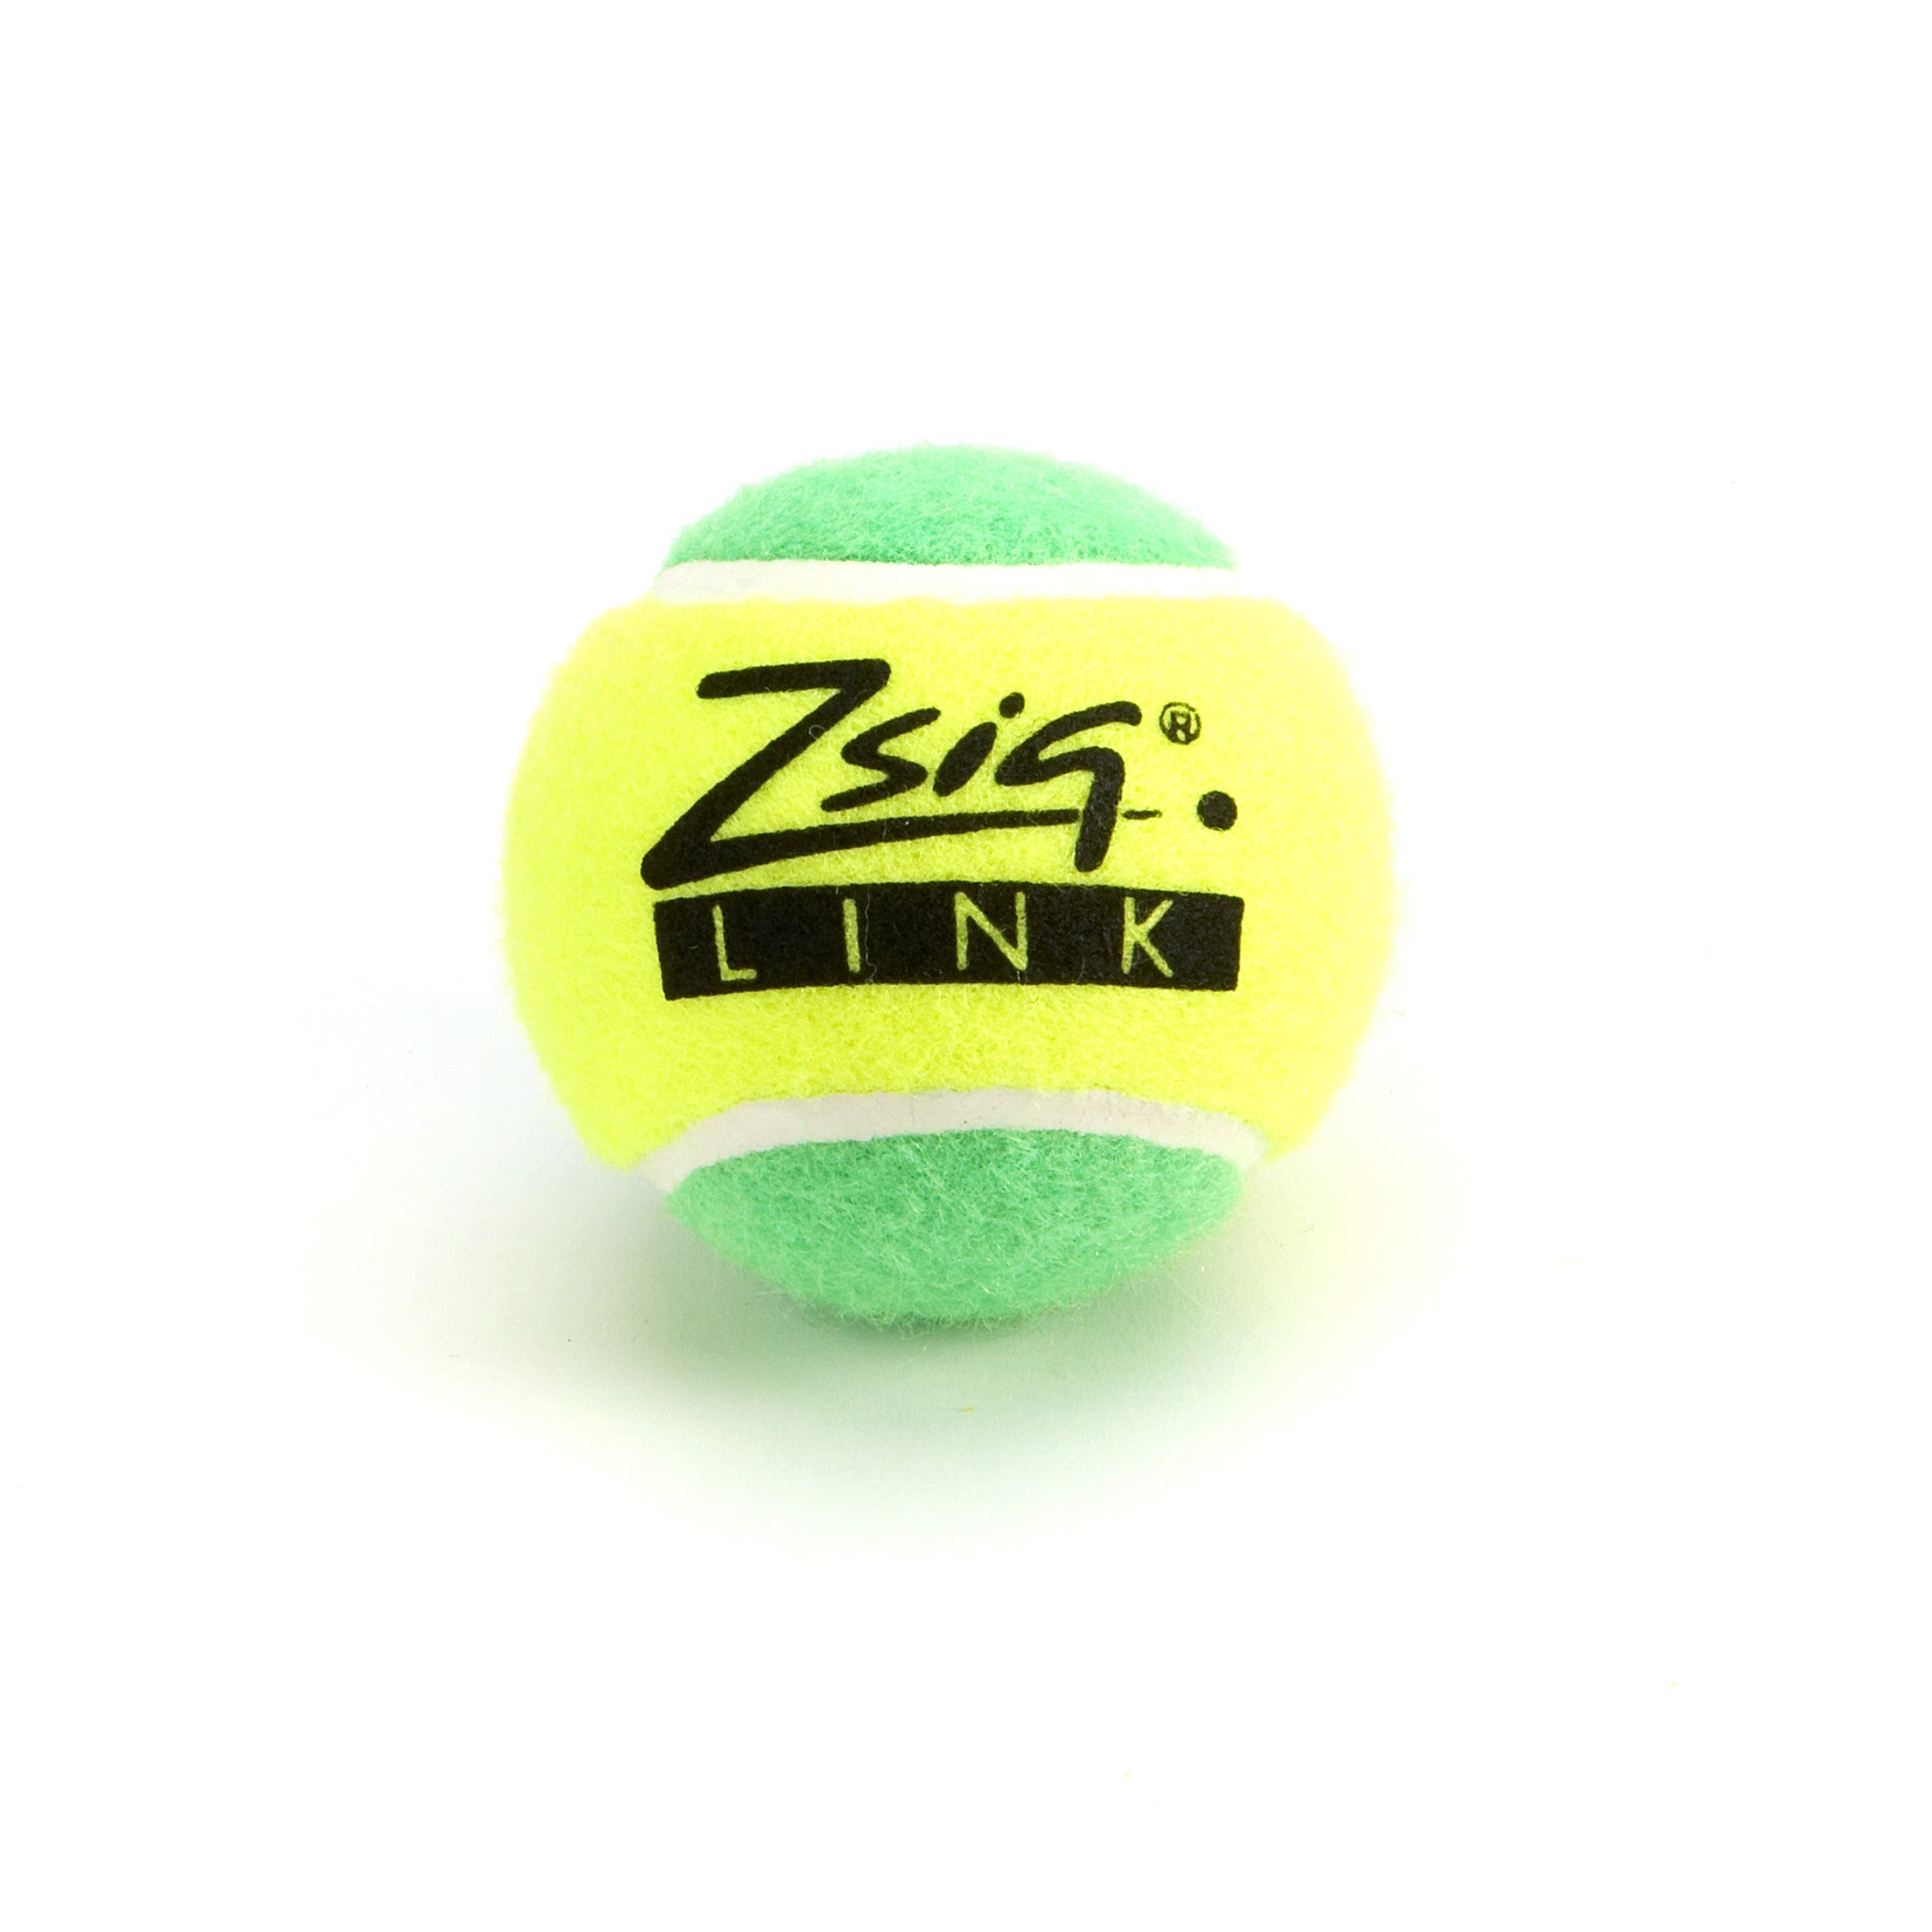 Green Mini Tennis Balls. Zsig Link Green single ball.